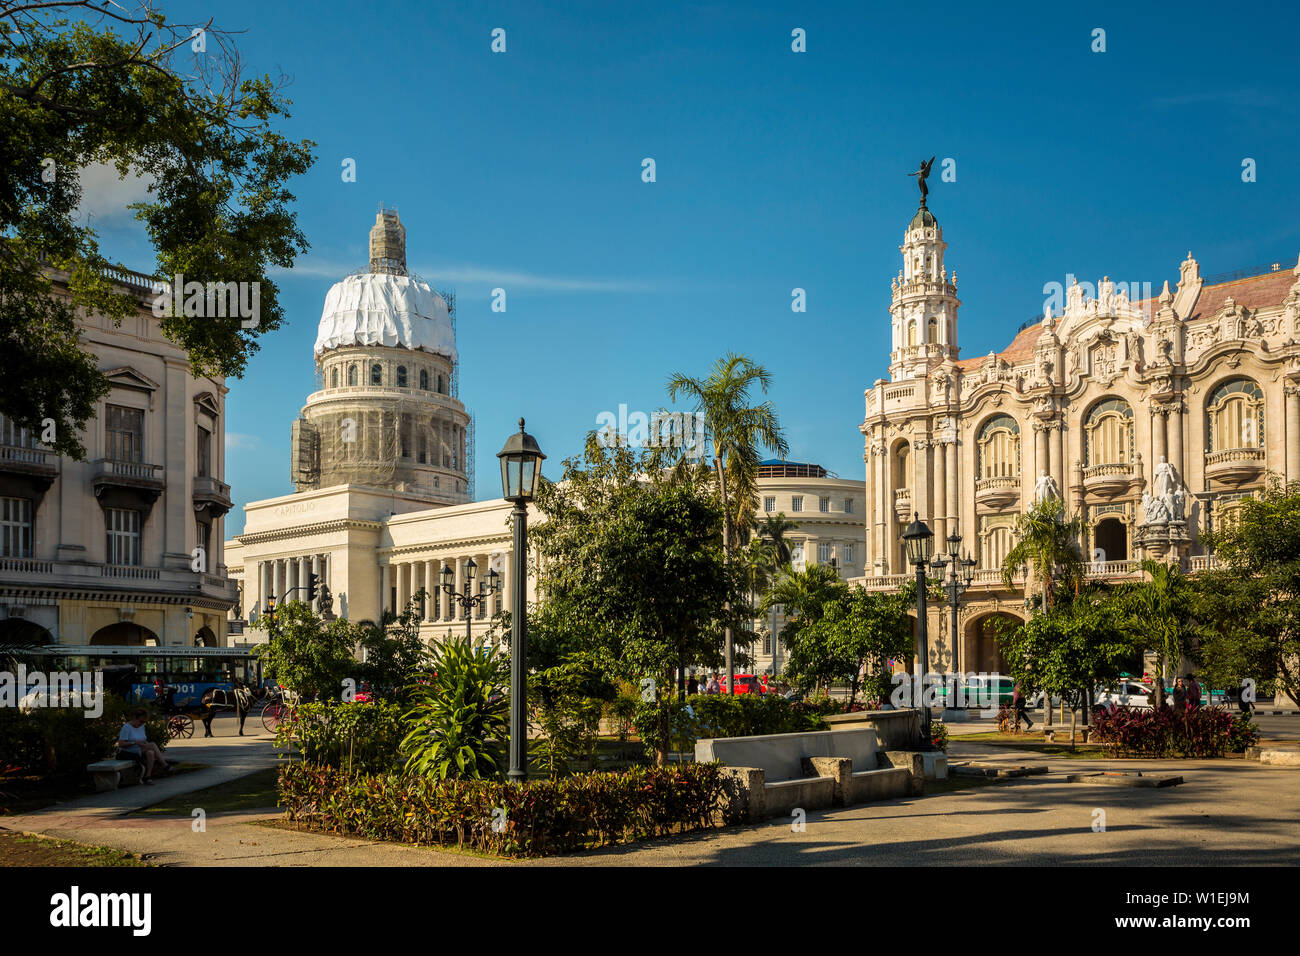 Das Gran Teatro de La Habana, El Capitolio, Parque Central in Havanna, Kuba, Karibik, Karibik, Zentral- und Lateinamerika Stockfoto